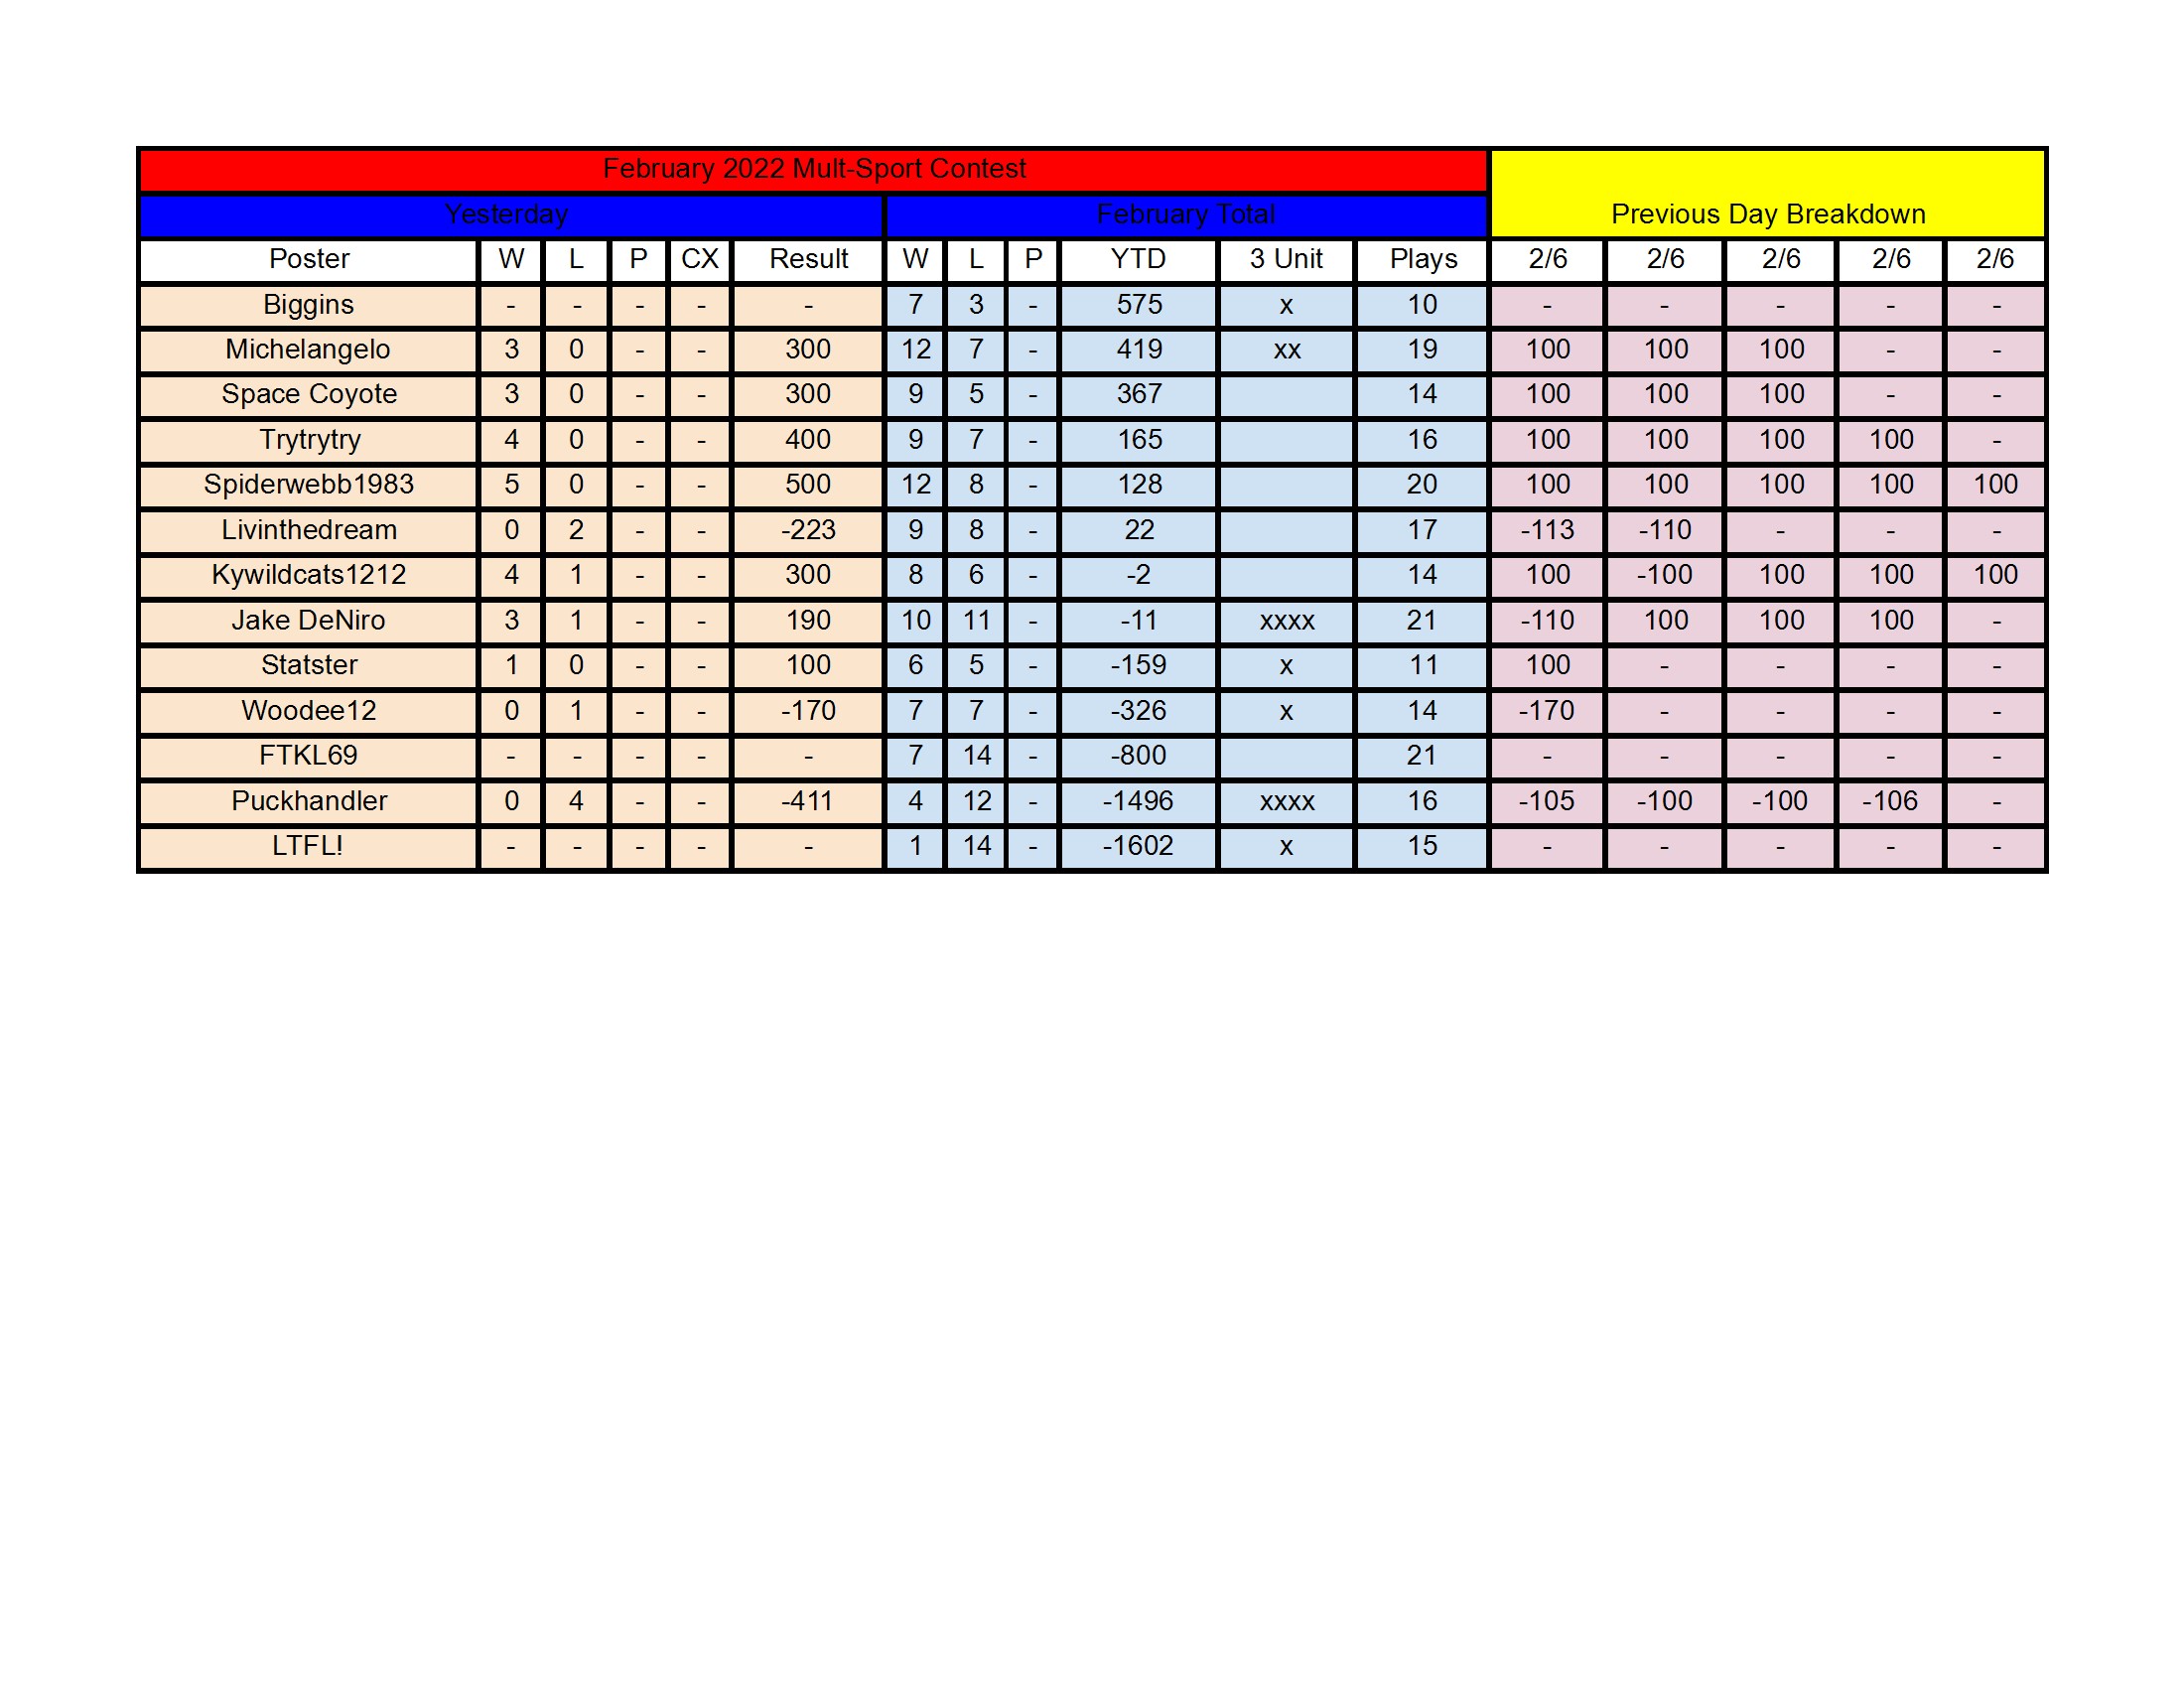 February Standings - 2_6 conv 1.jpeg